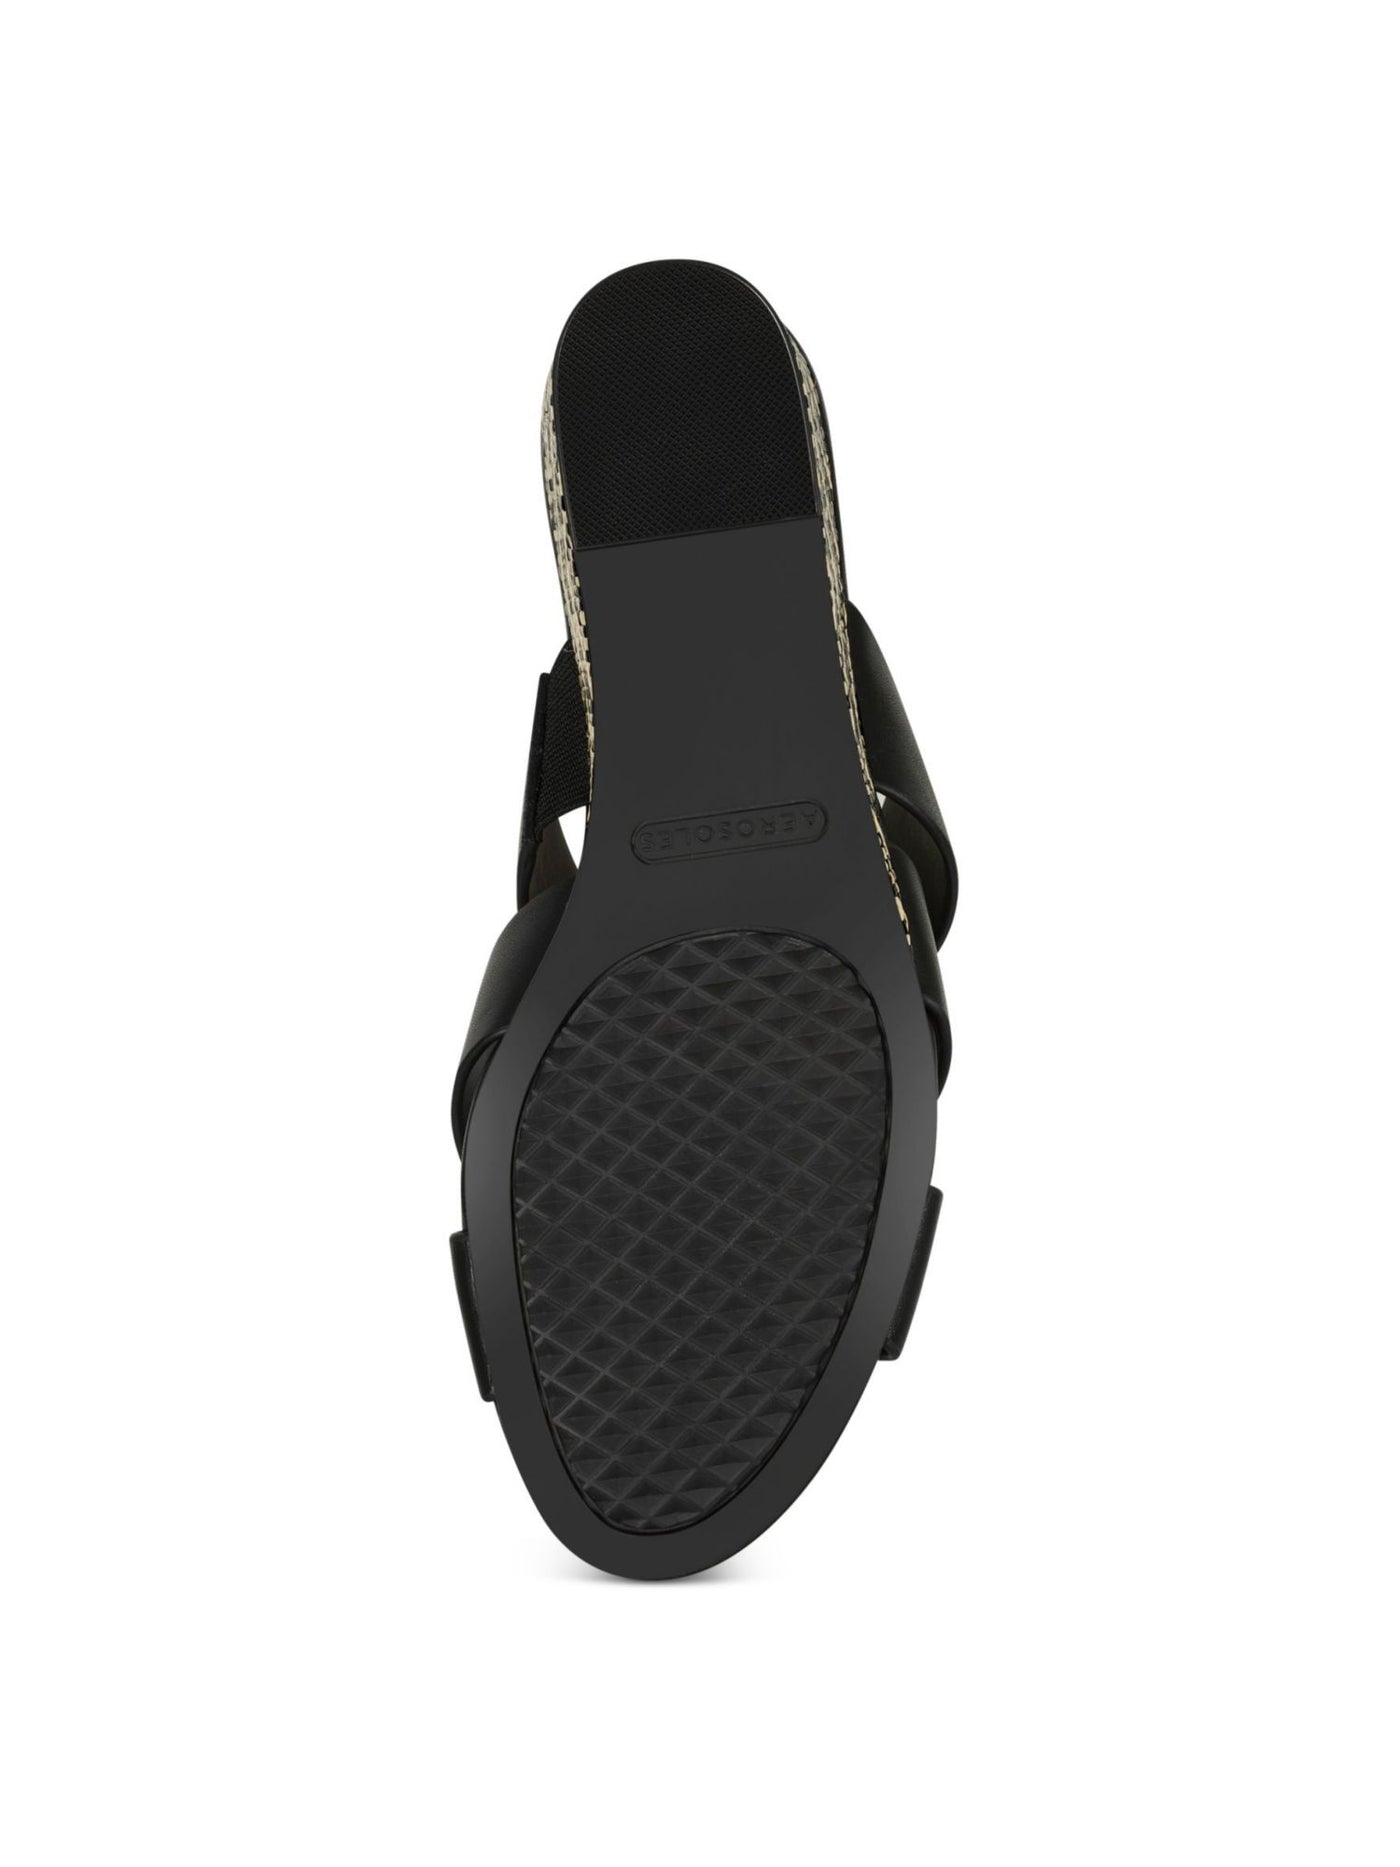 AEROSOLES Womens Black Combo Crisscross Straps Goring Cushioned Westfield Almond Toe Wedge Slip On Leather Slide Sandals Shoes M